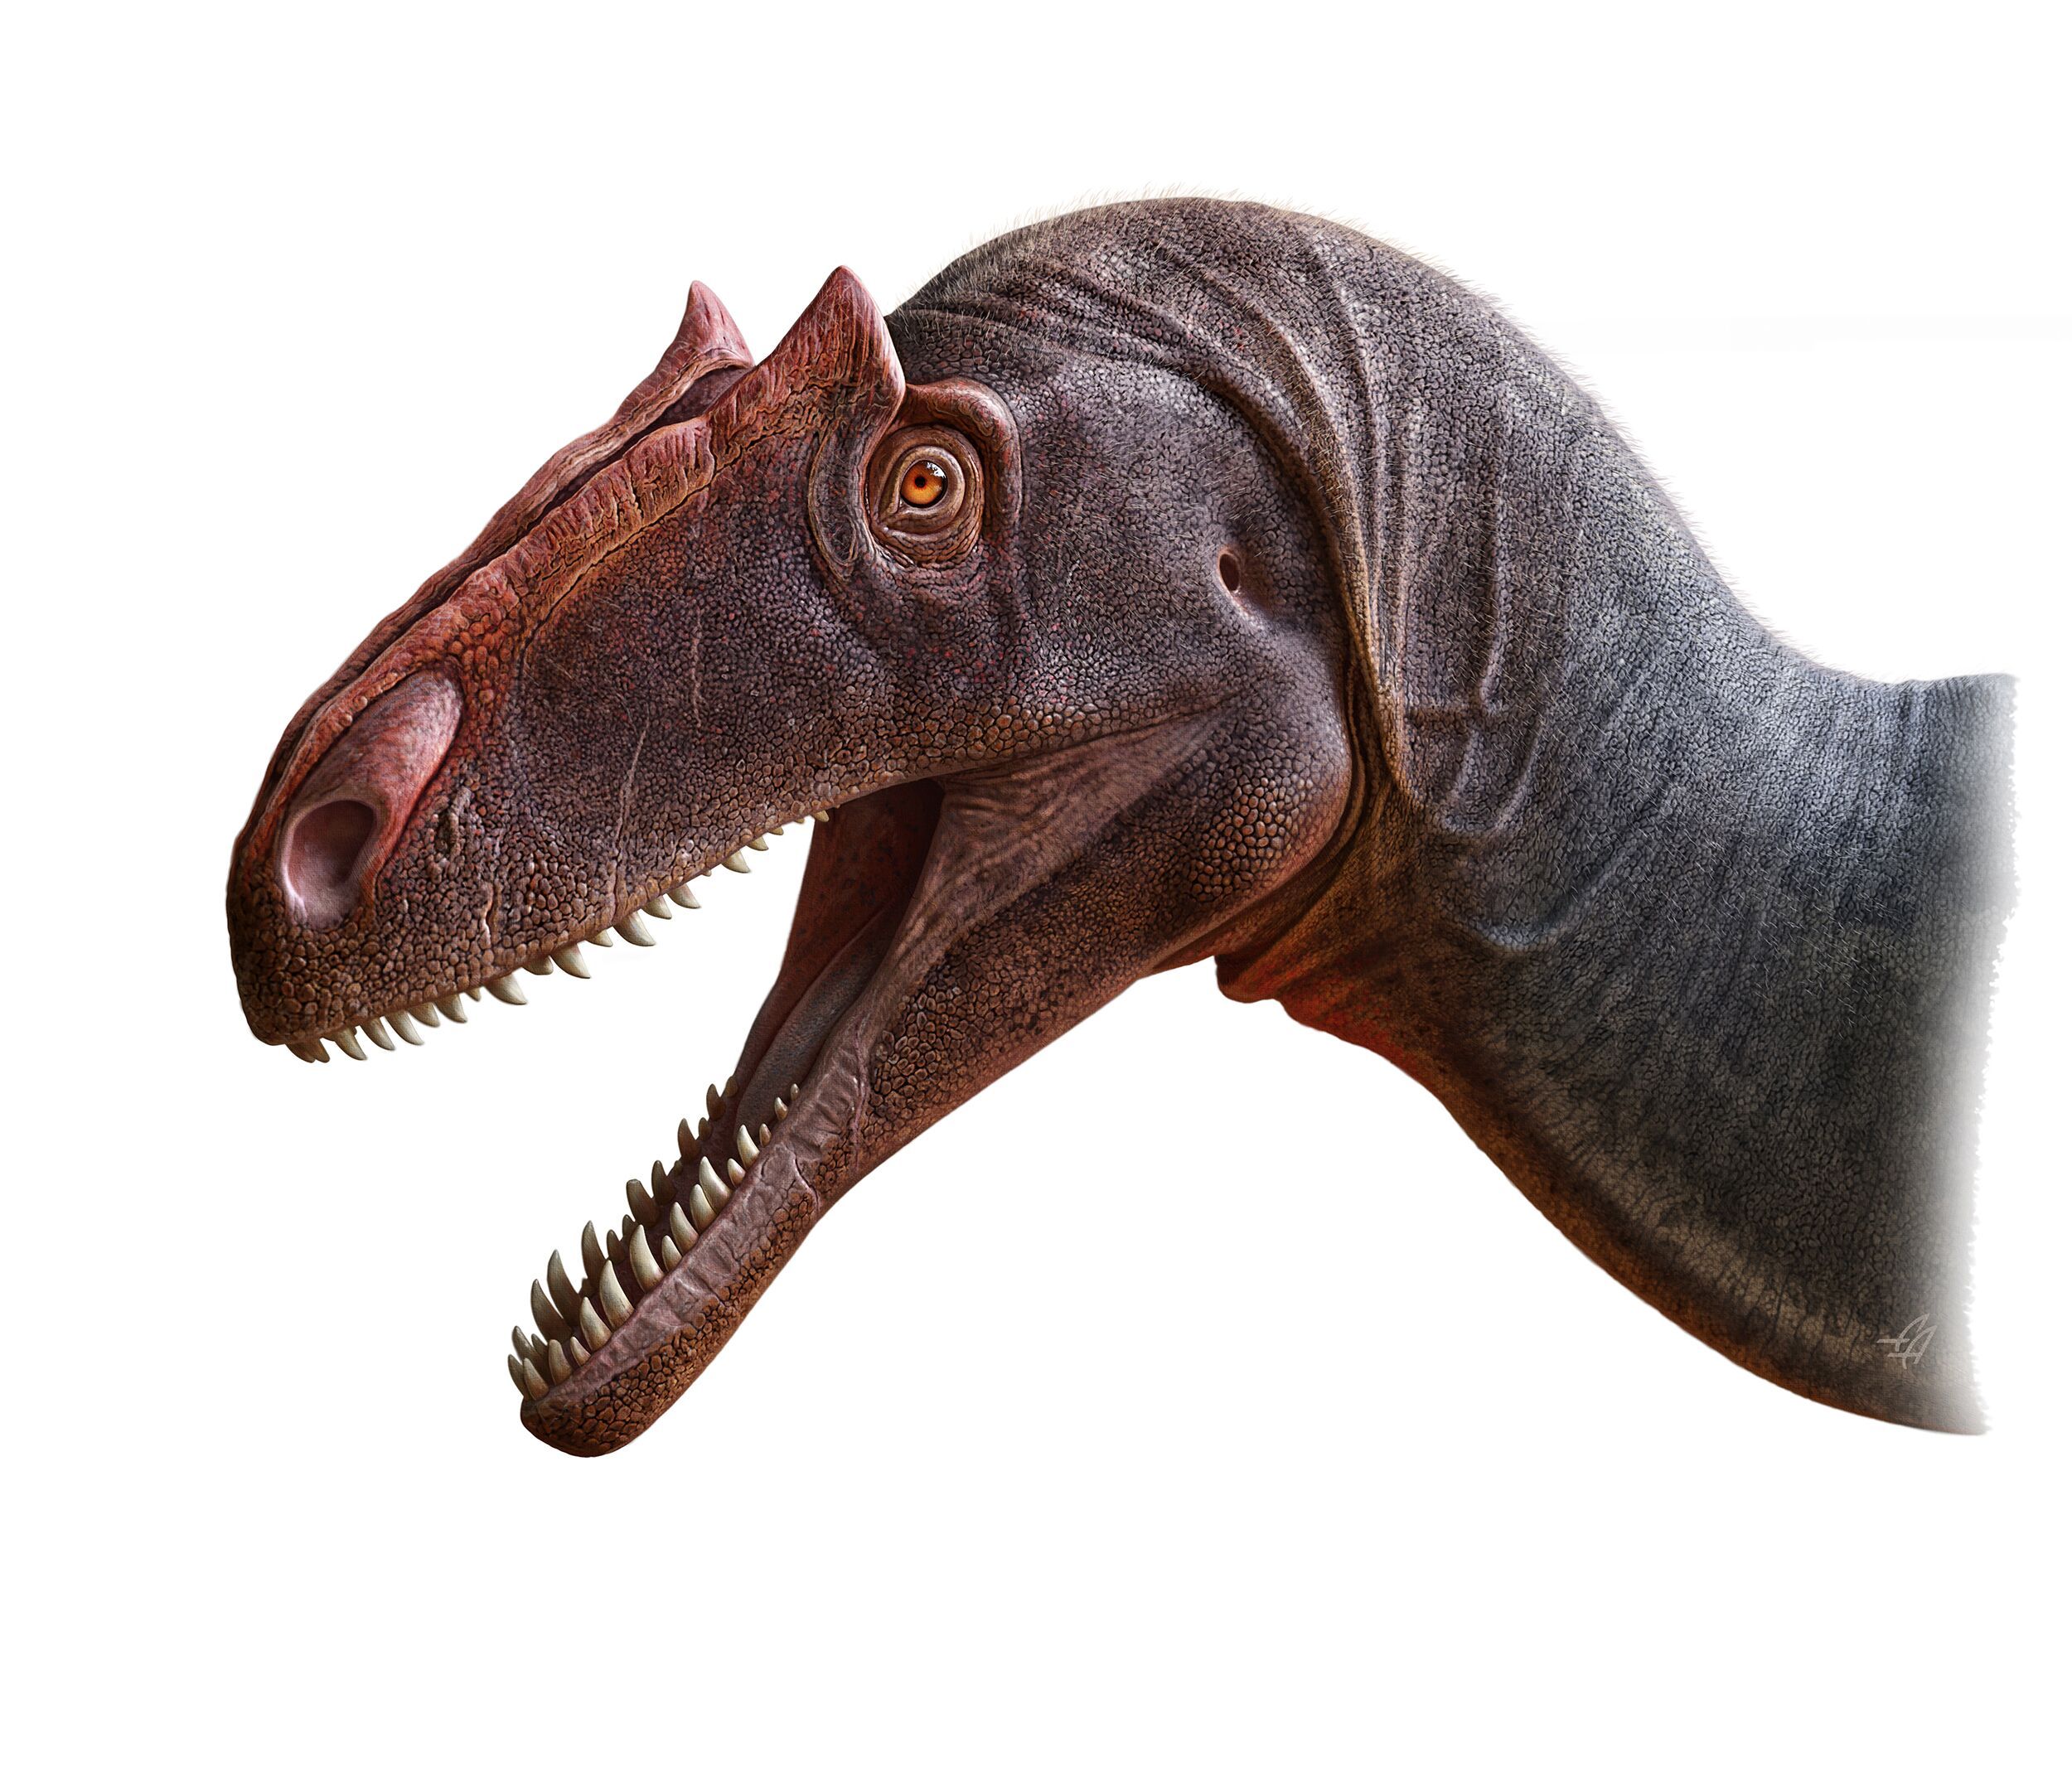 Allosaurus Jimmadseni - New Dinosaur Discovered